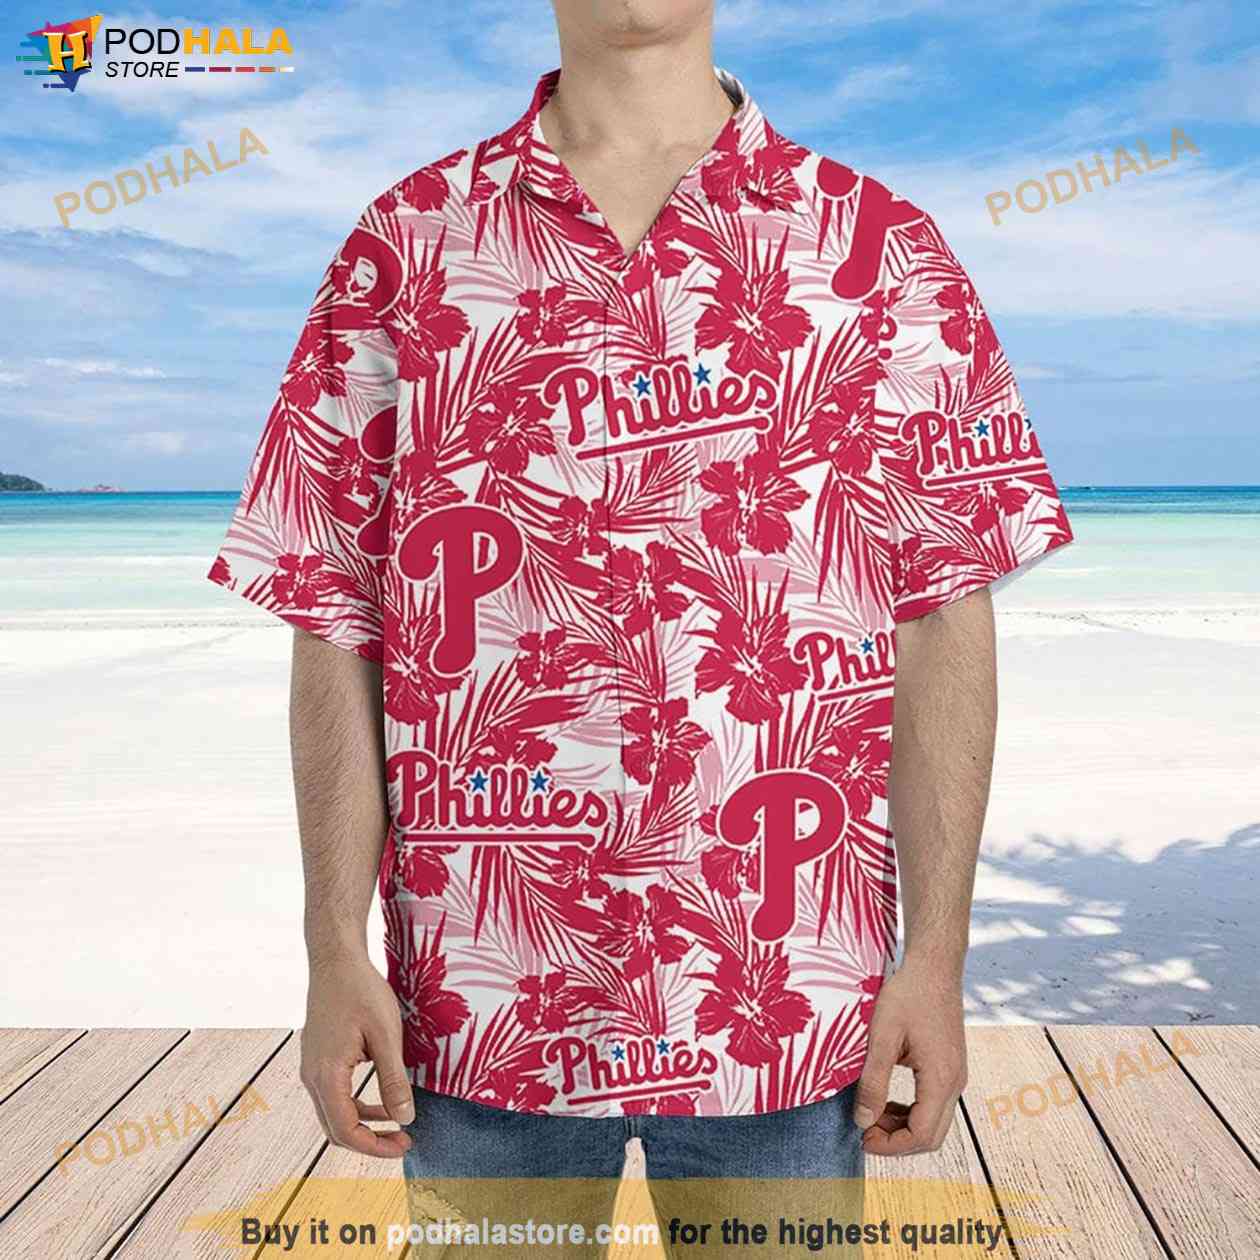 Philadelphia Phillies Major League Baseball 3D Hawaiian Shirt